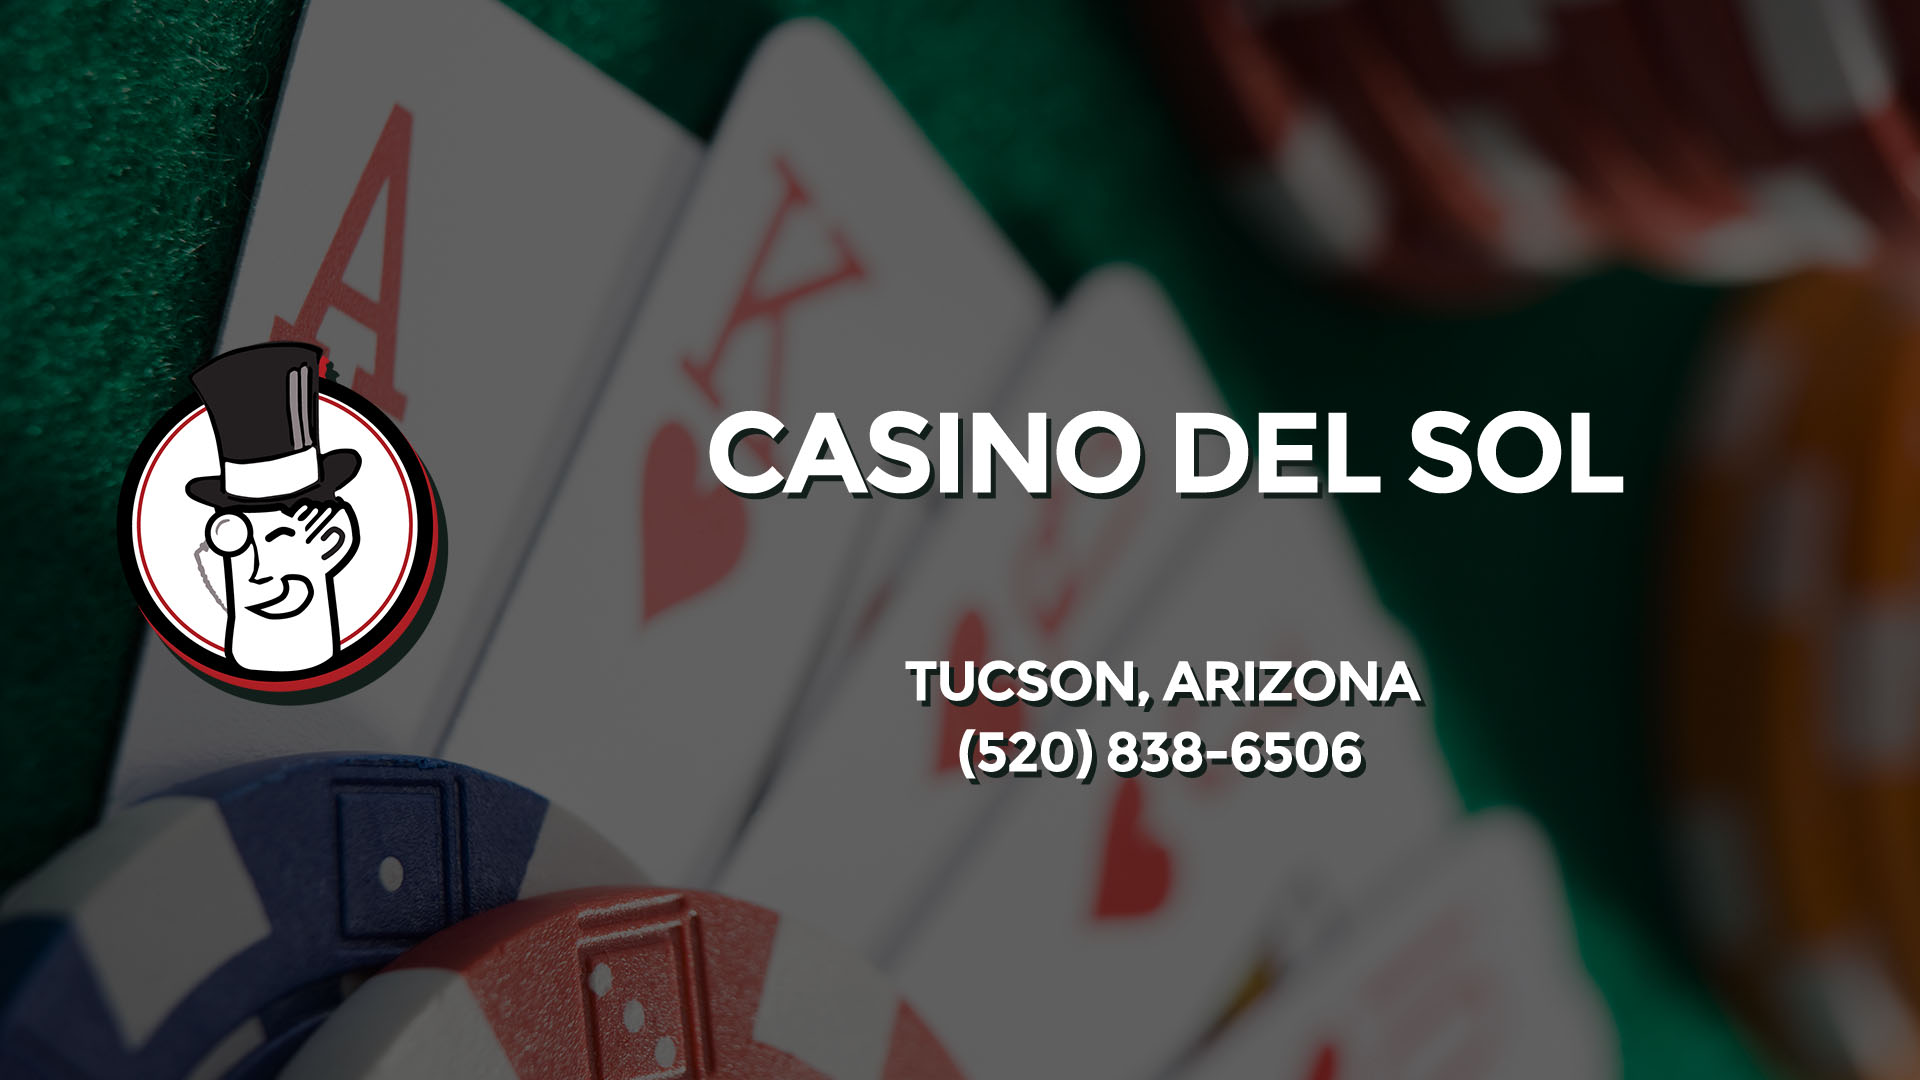 Casino del sol in tucson arizona resorts and spas